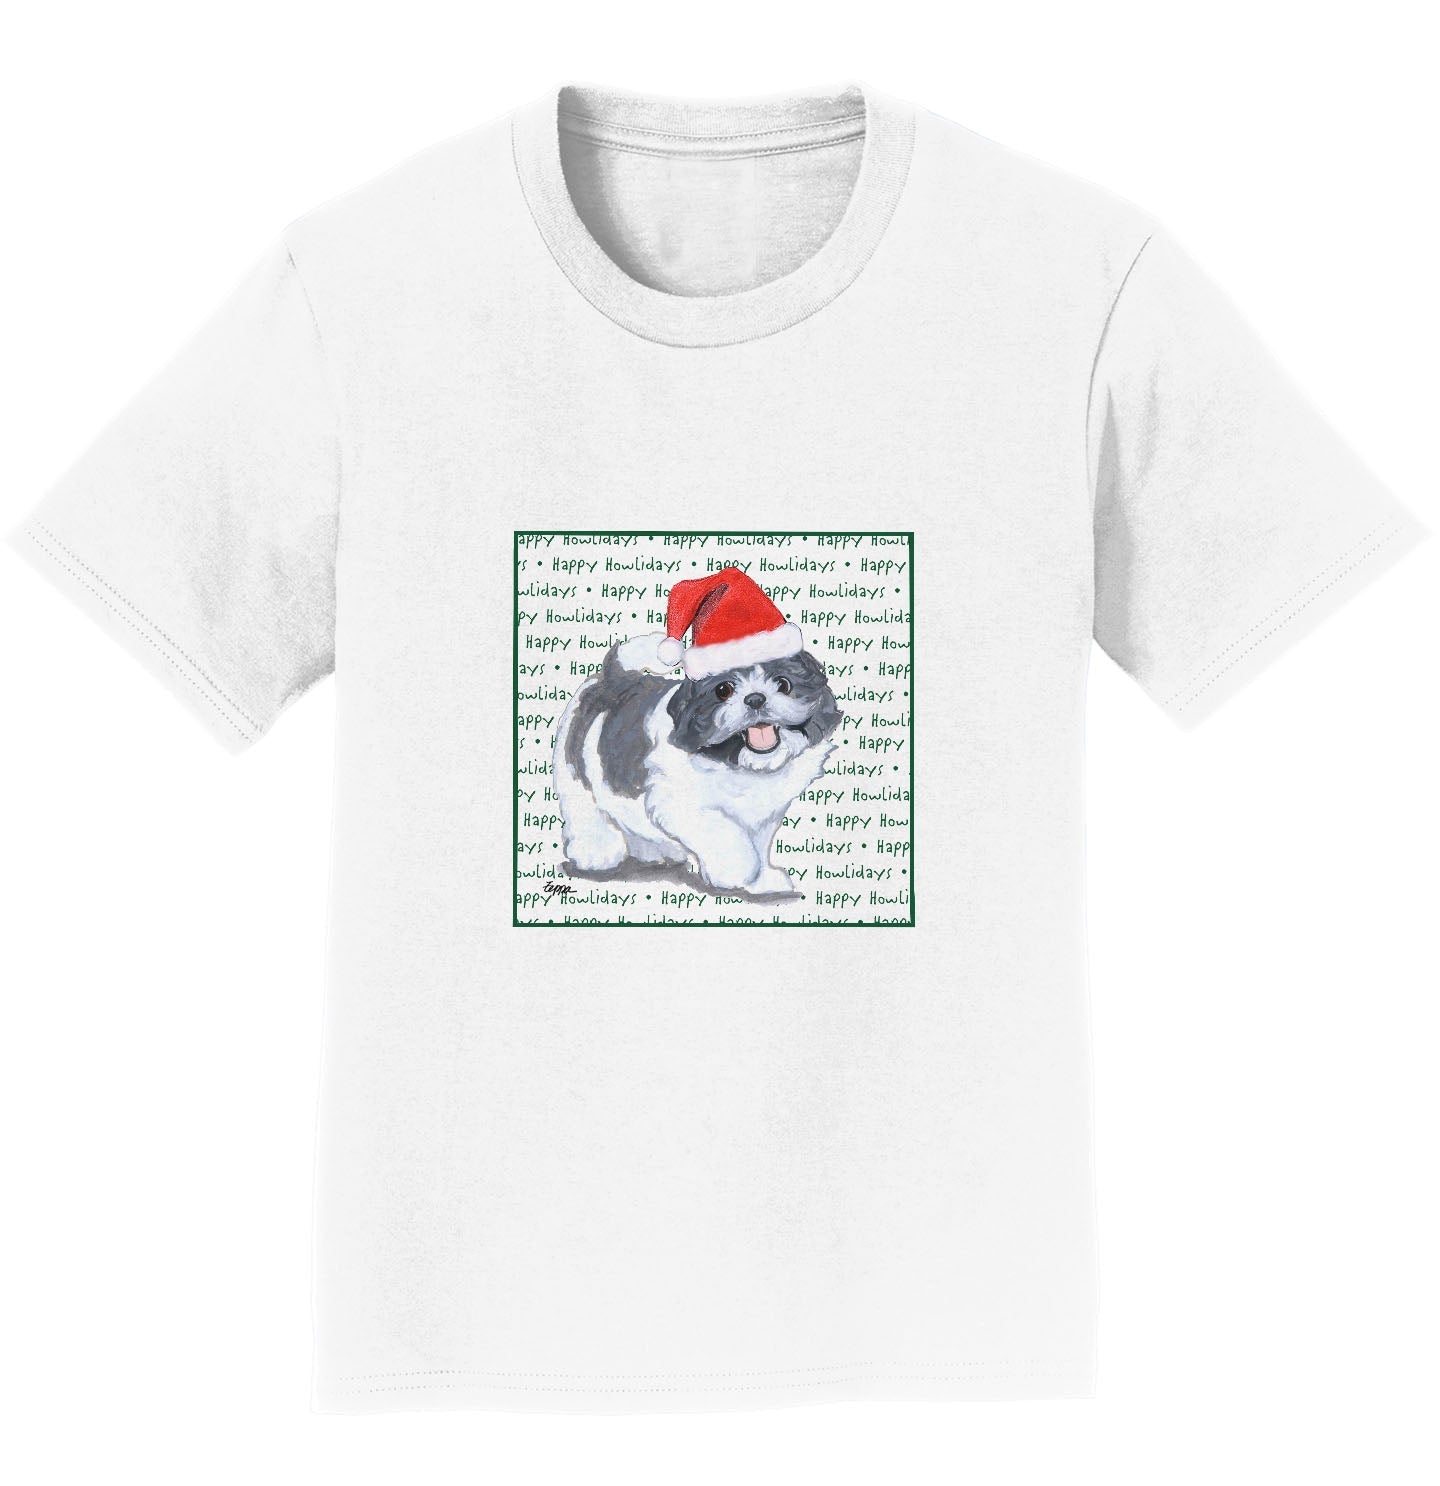 Shih Tzu Puppy Happy Howlidays Text - Kids' Unisex T-Shirt